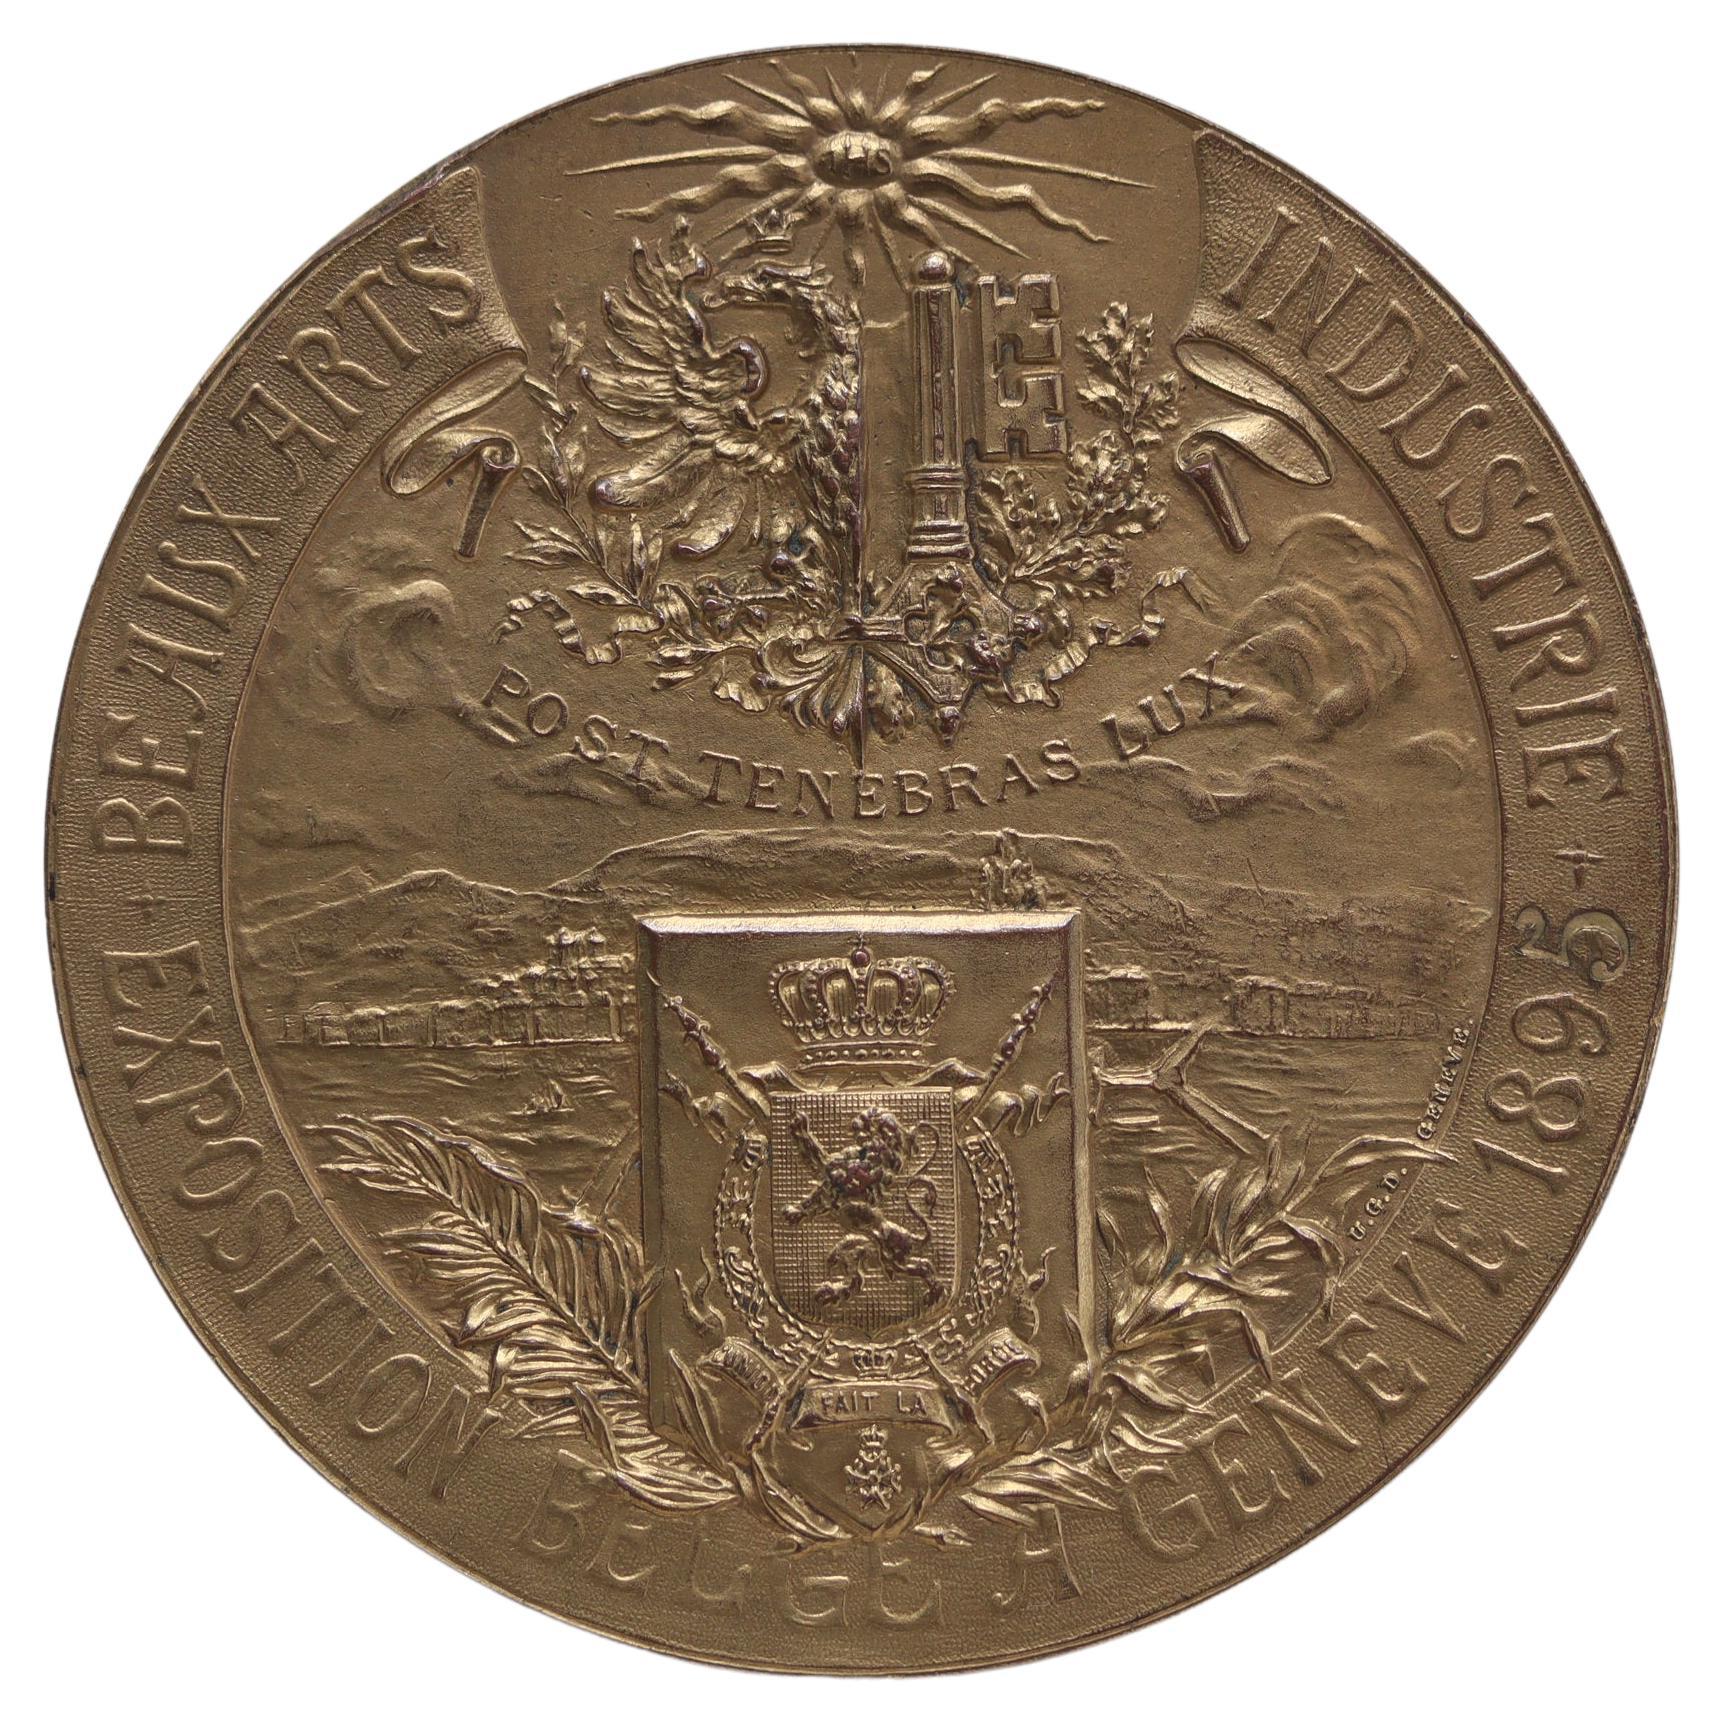 Medal probably made for Belgian delegation to Geneva Exposition 1896